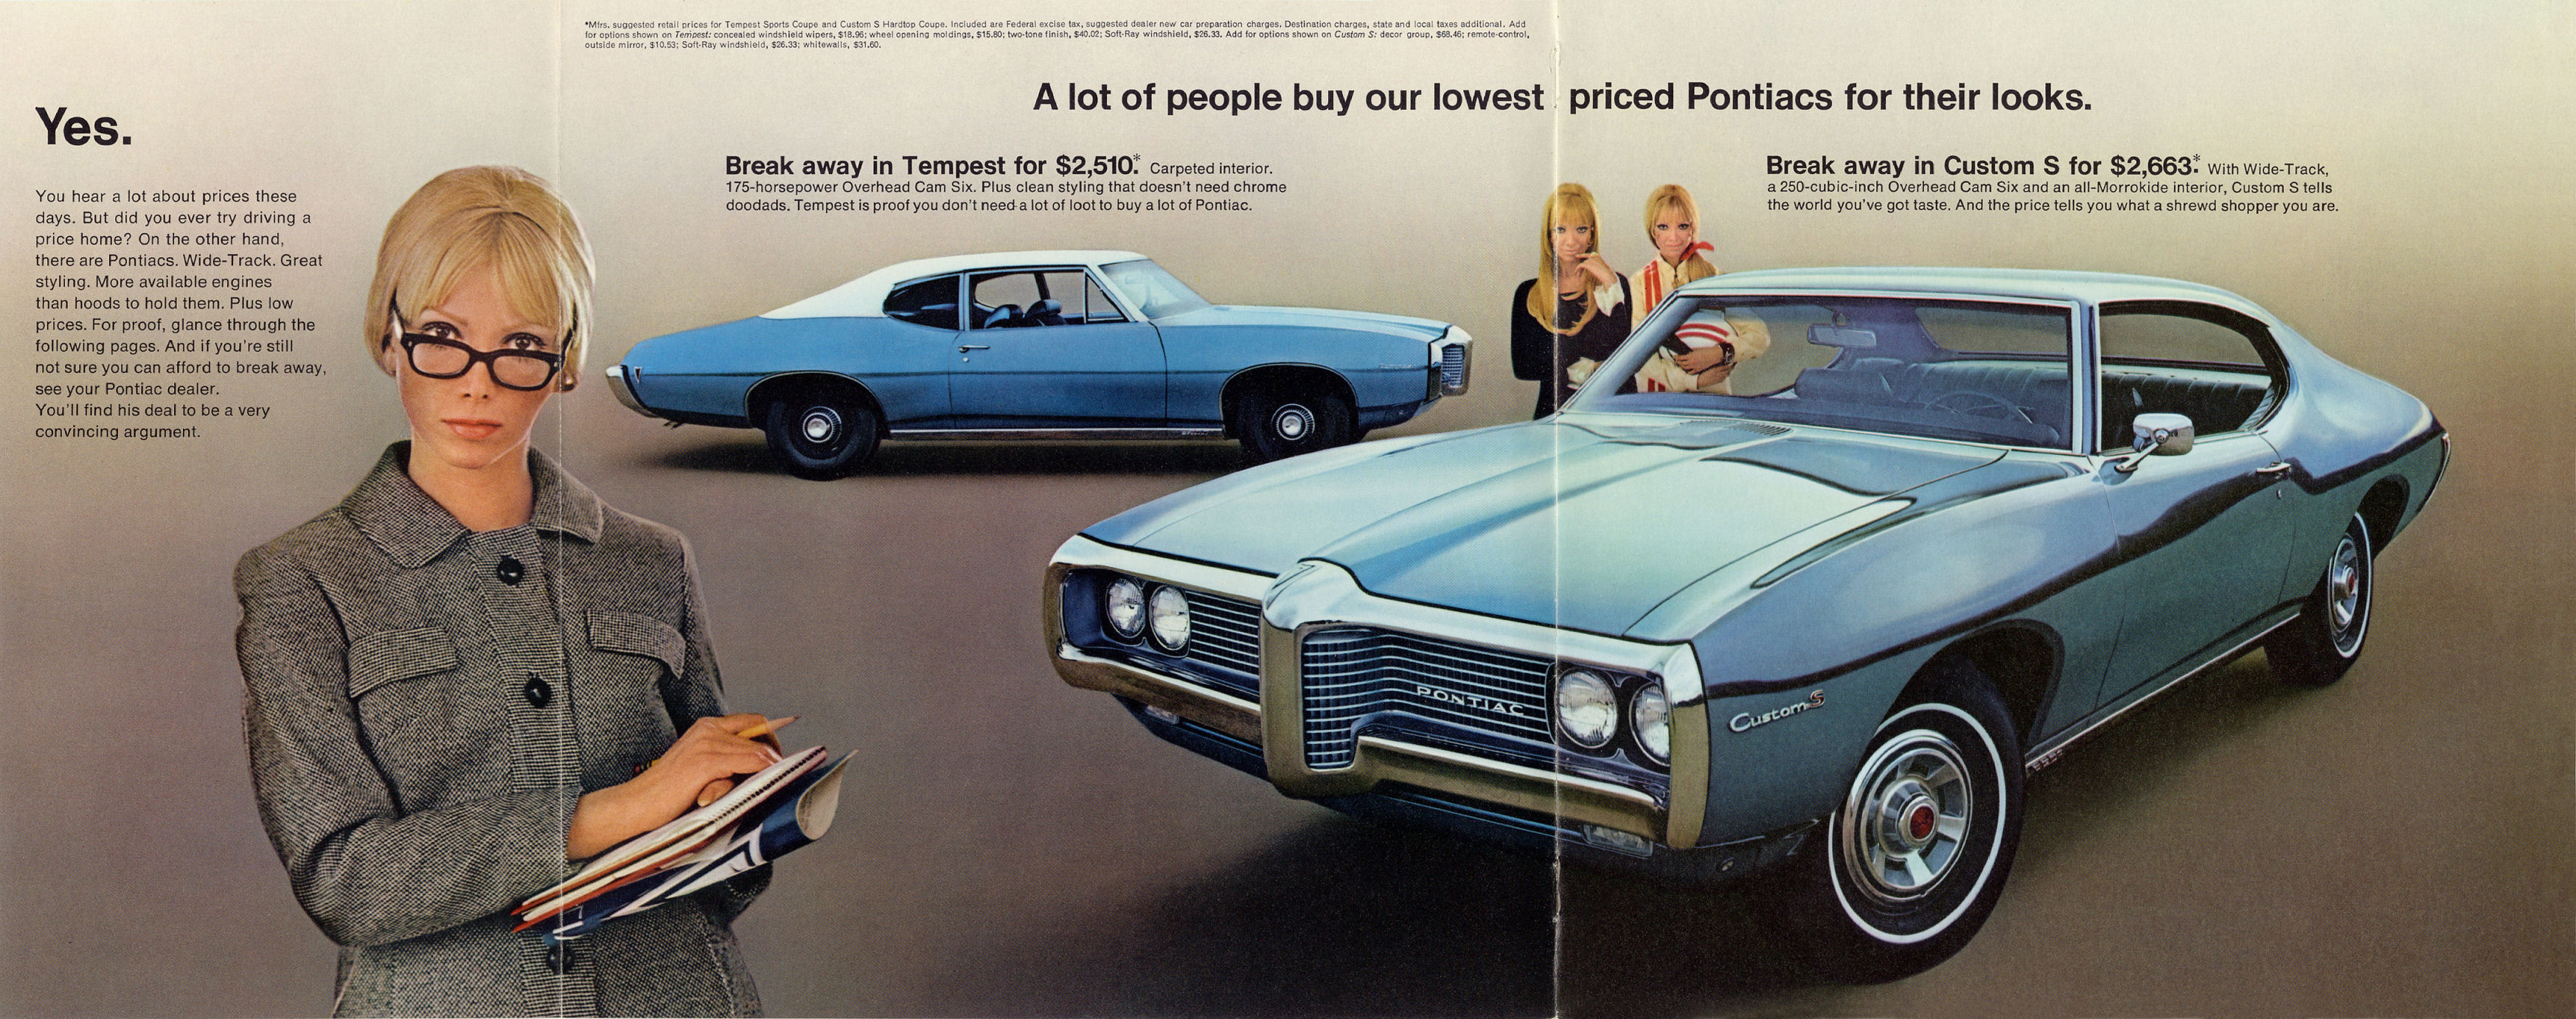 Pontiac-1969-Mailer-02-03.jpg